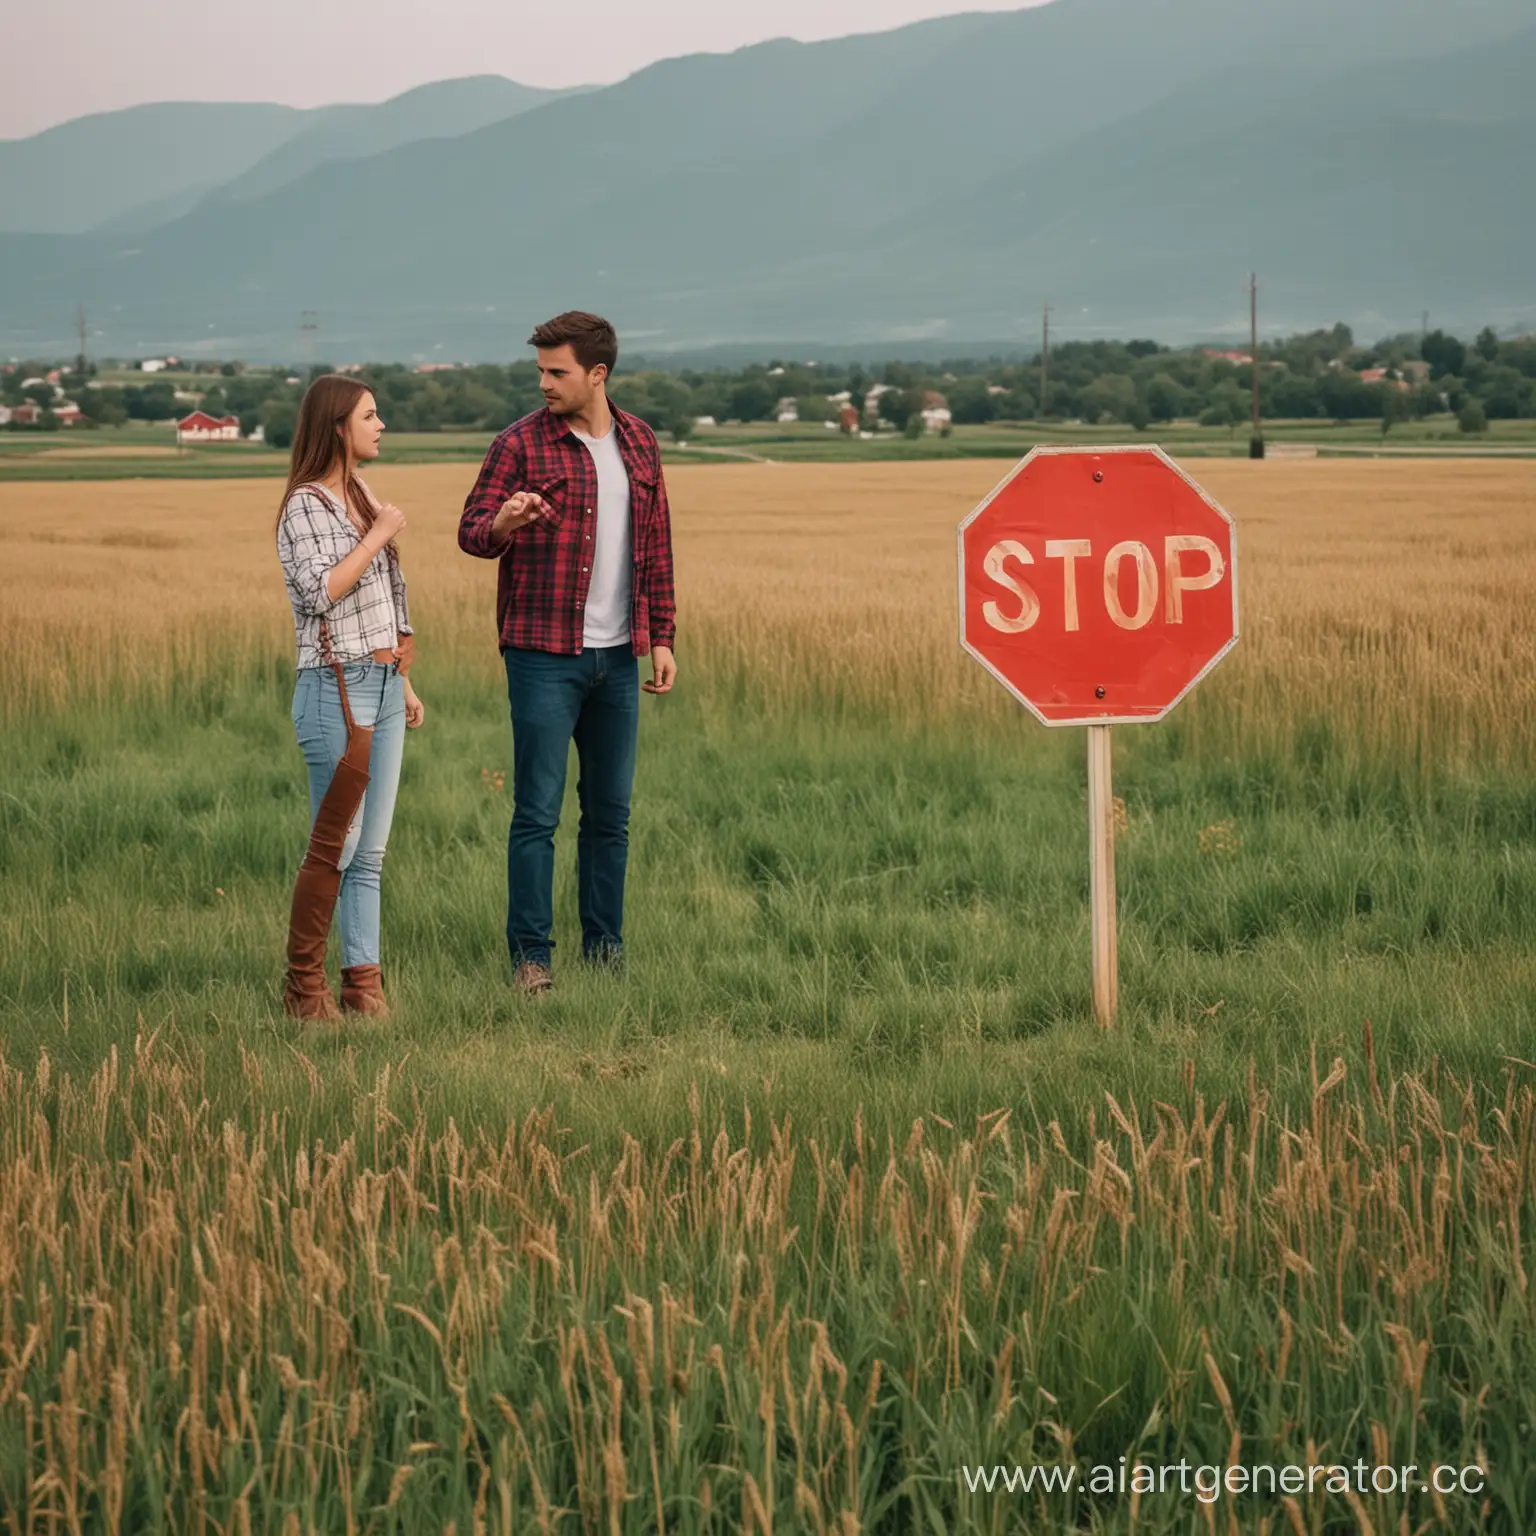 Man-Holding-Stop-Sign-Blocks-Girls-Path-in-Field